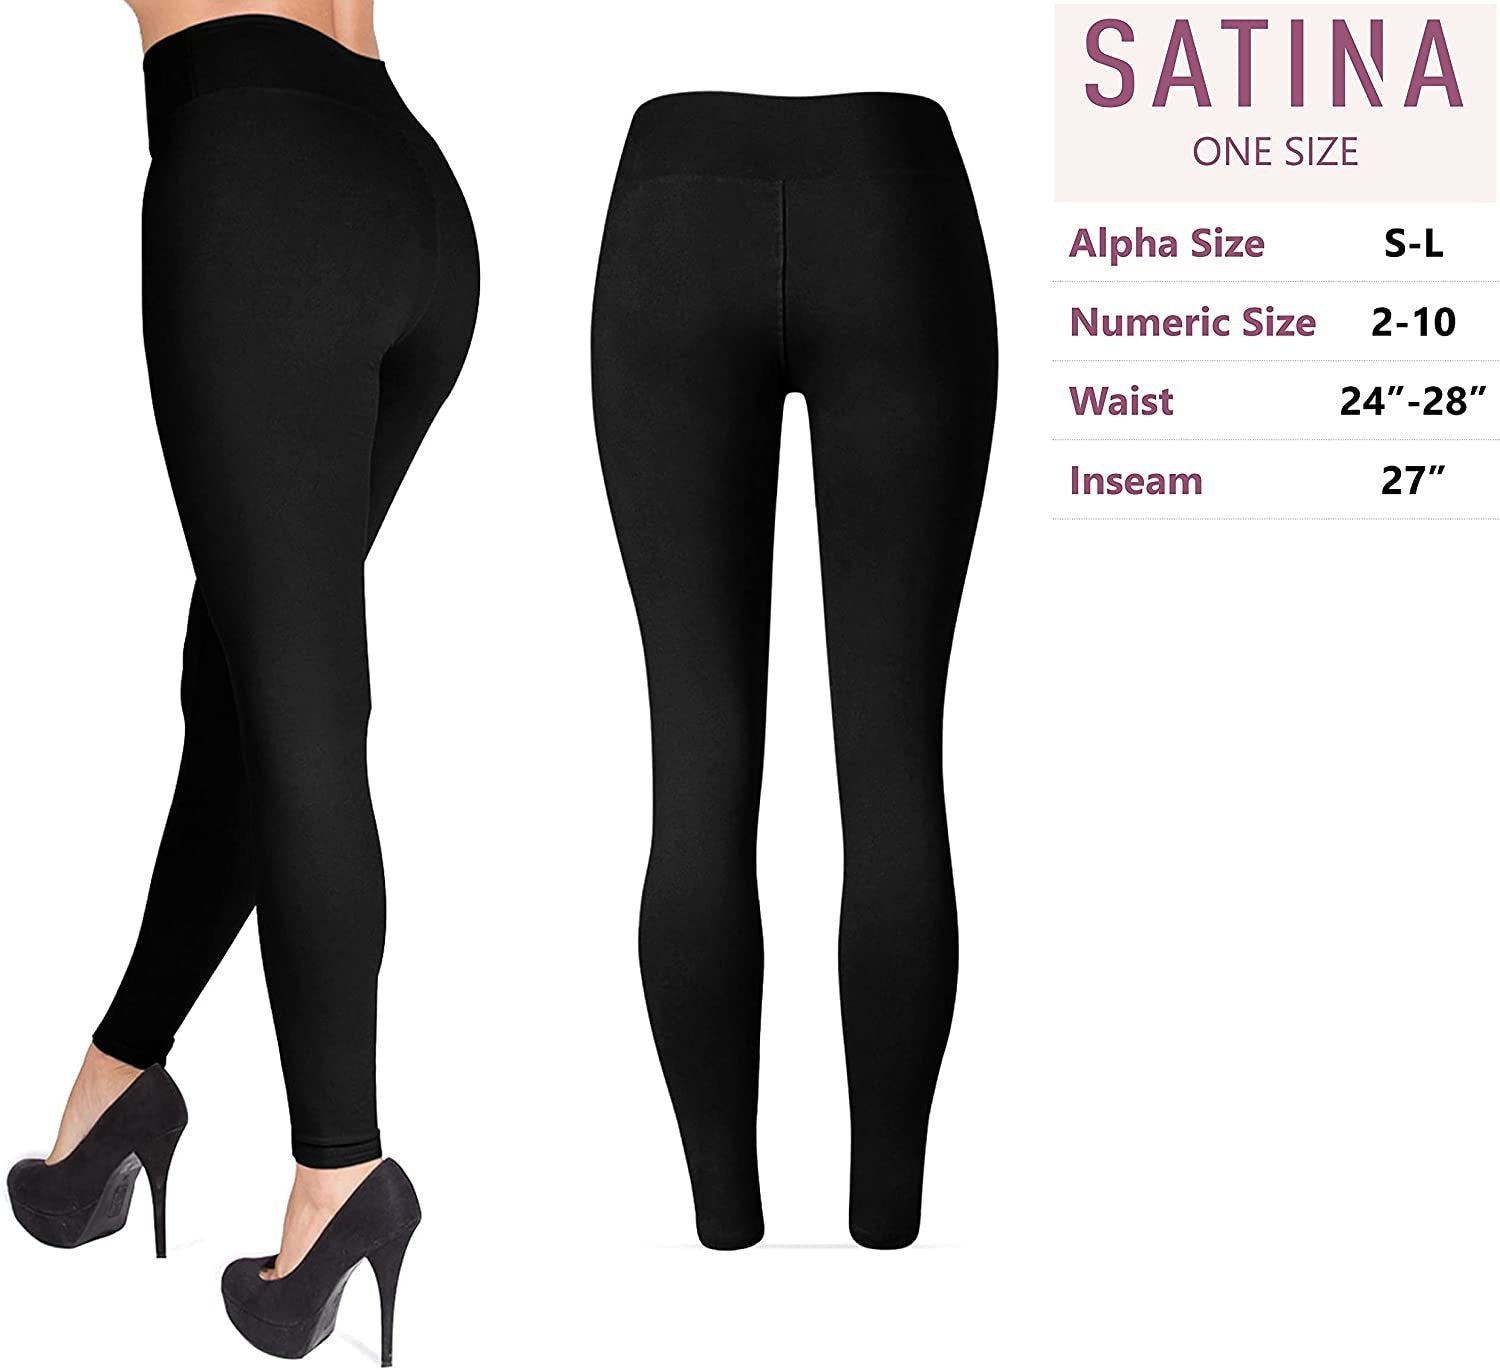 SATINA Black High Waisted Leggings 3 Waistband One Size - Free Shipping & Returns